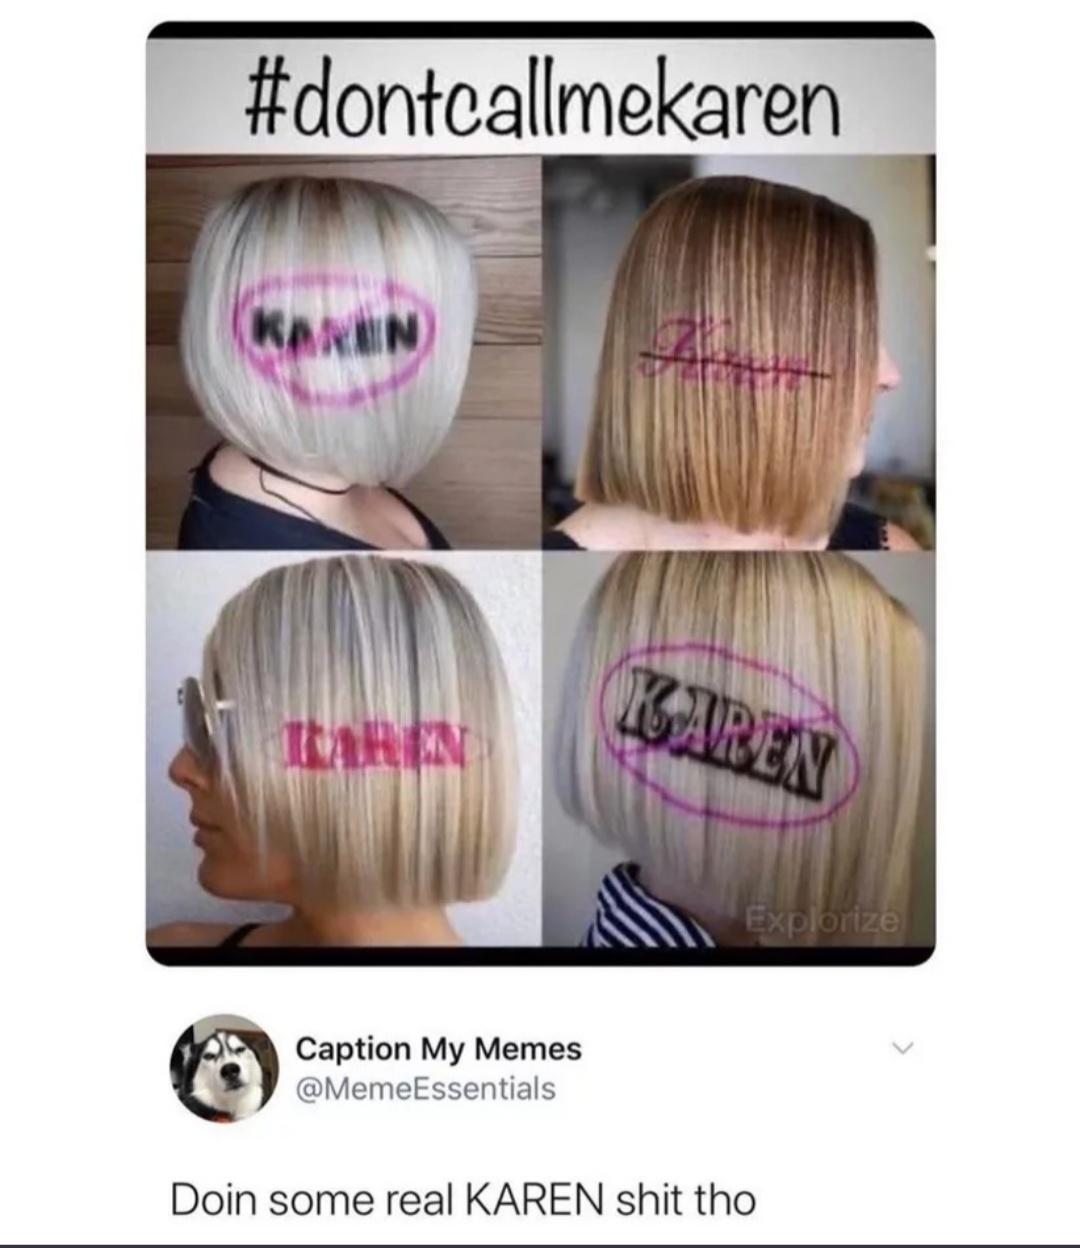 don t call me karen - Kanin Karen Ilarin Explorize Caption My Memes Doin some real Karen shit tho